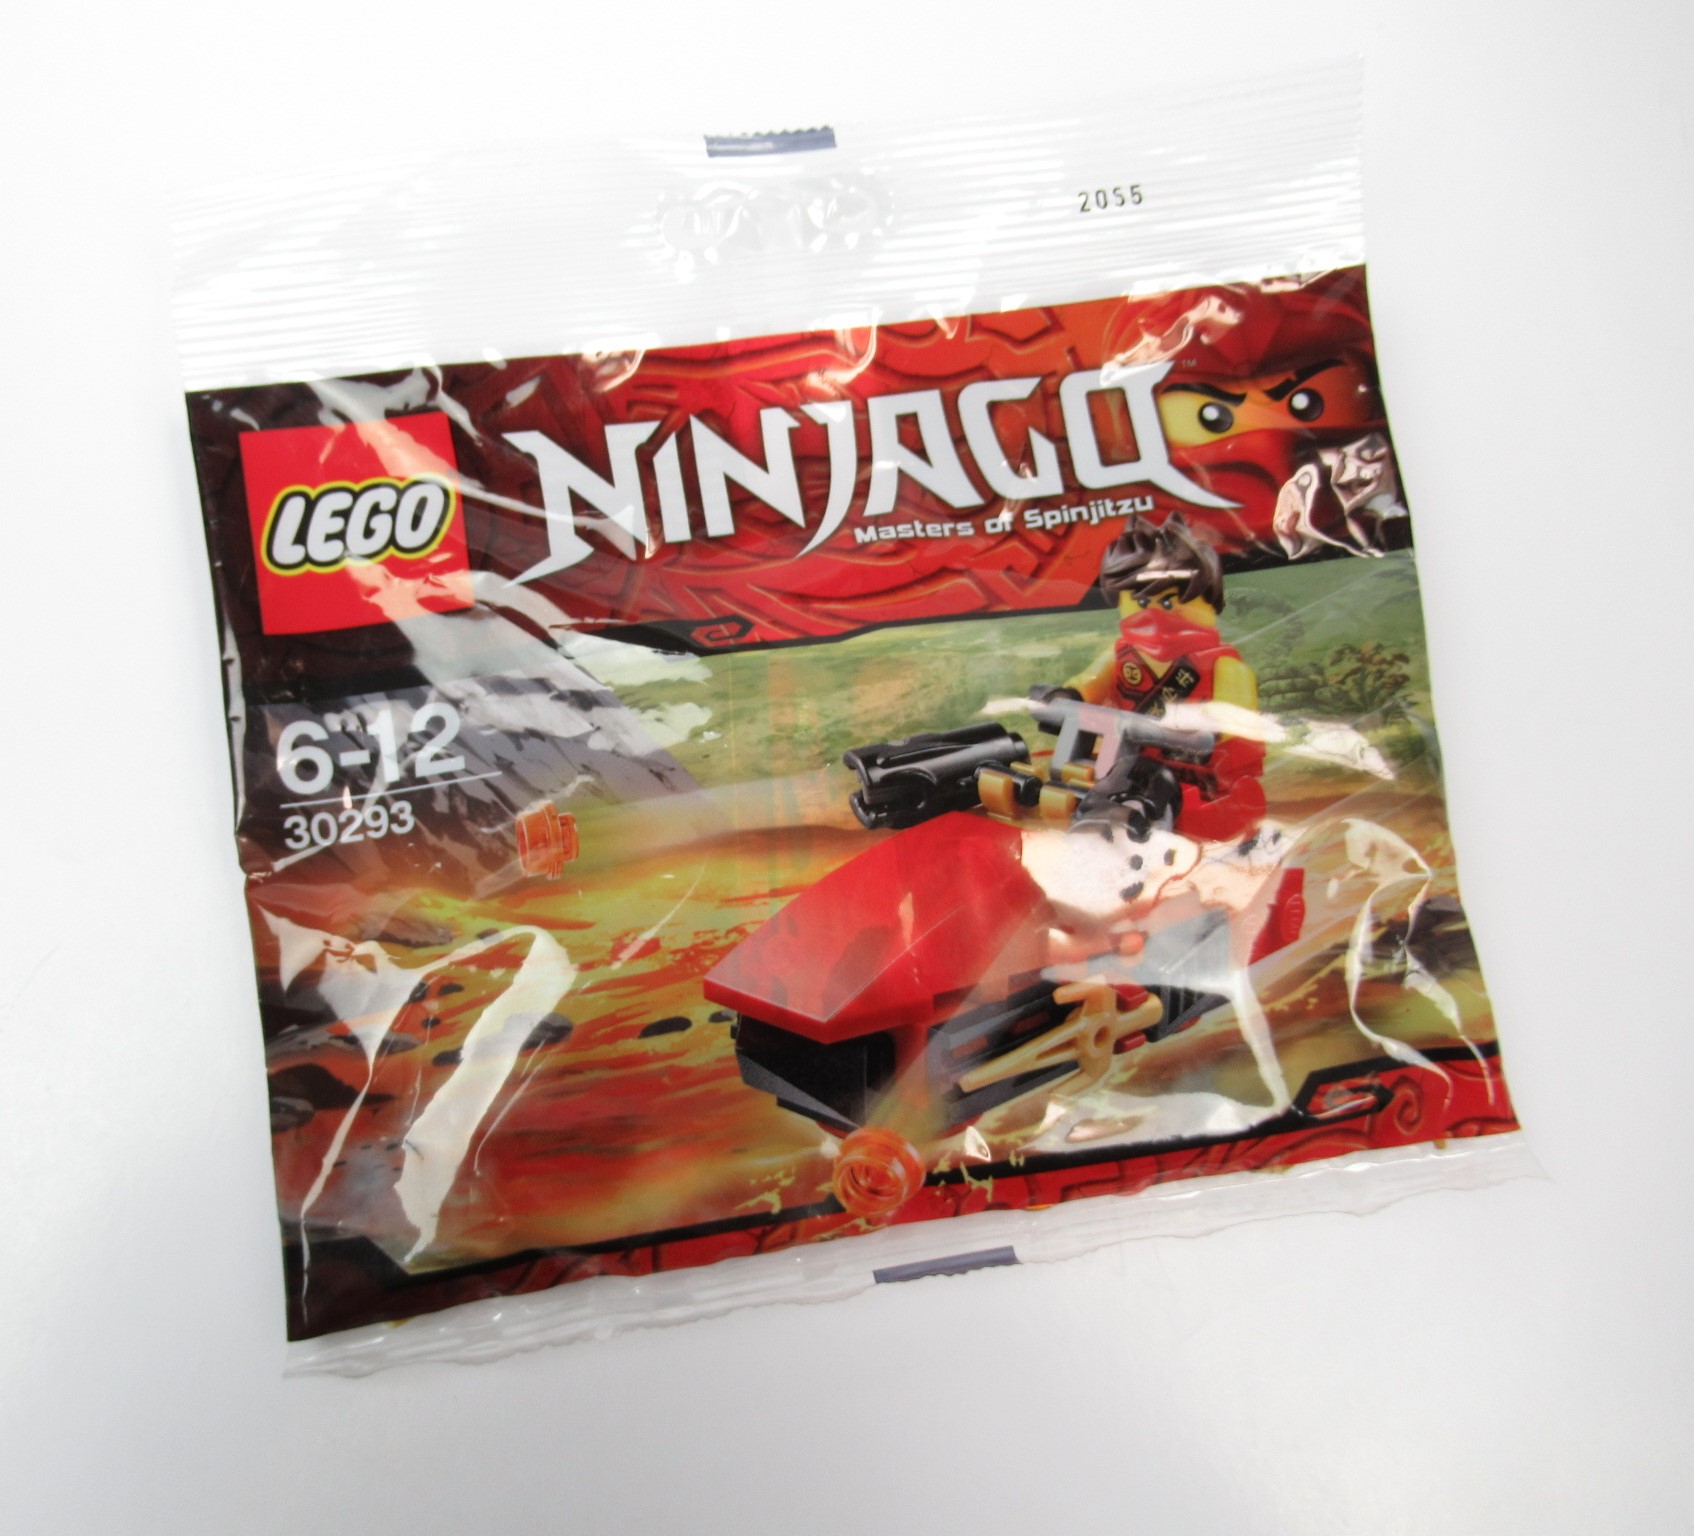 Изображение LEGO Ninjago 30293: Kai Drifter Polybag